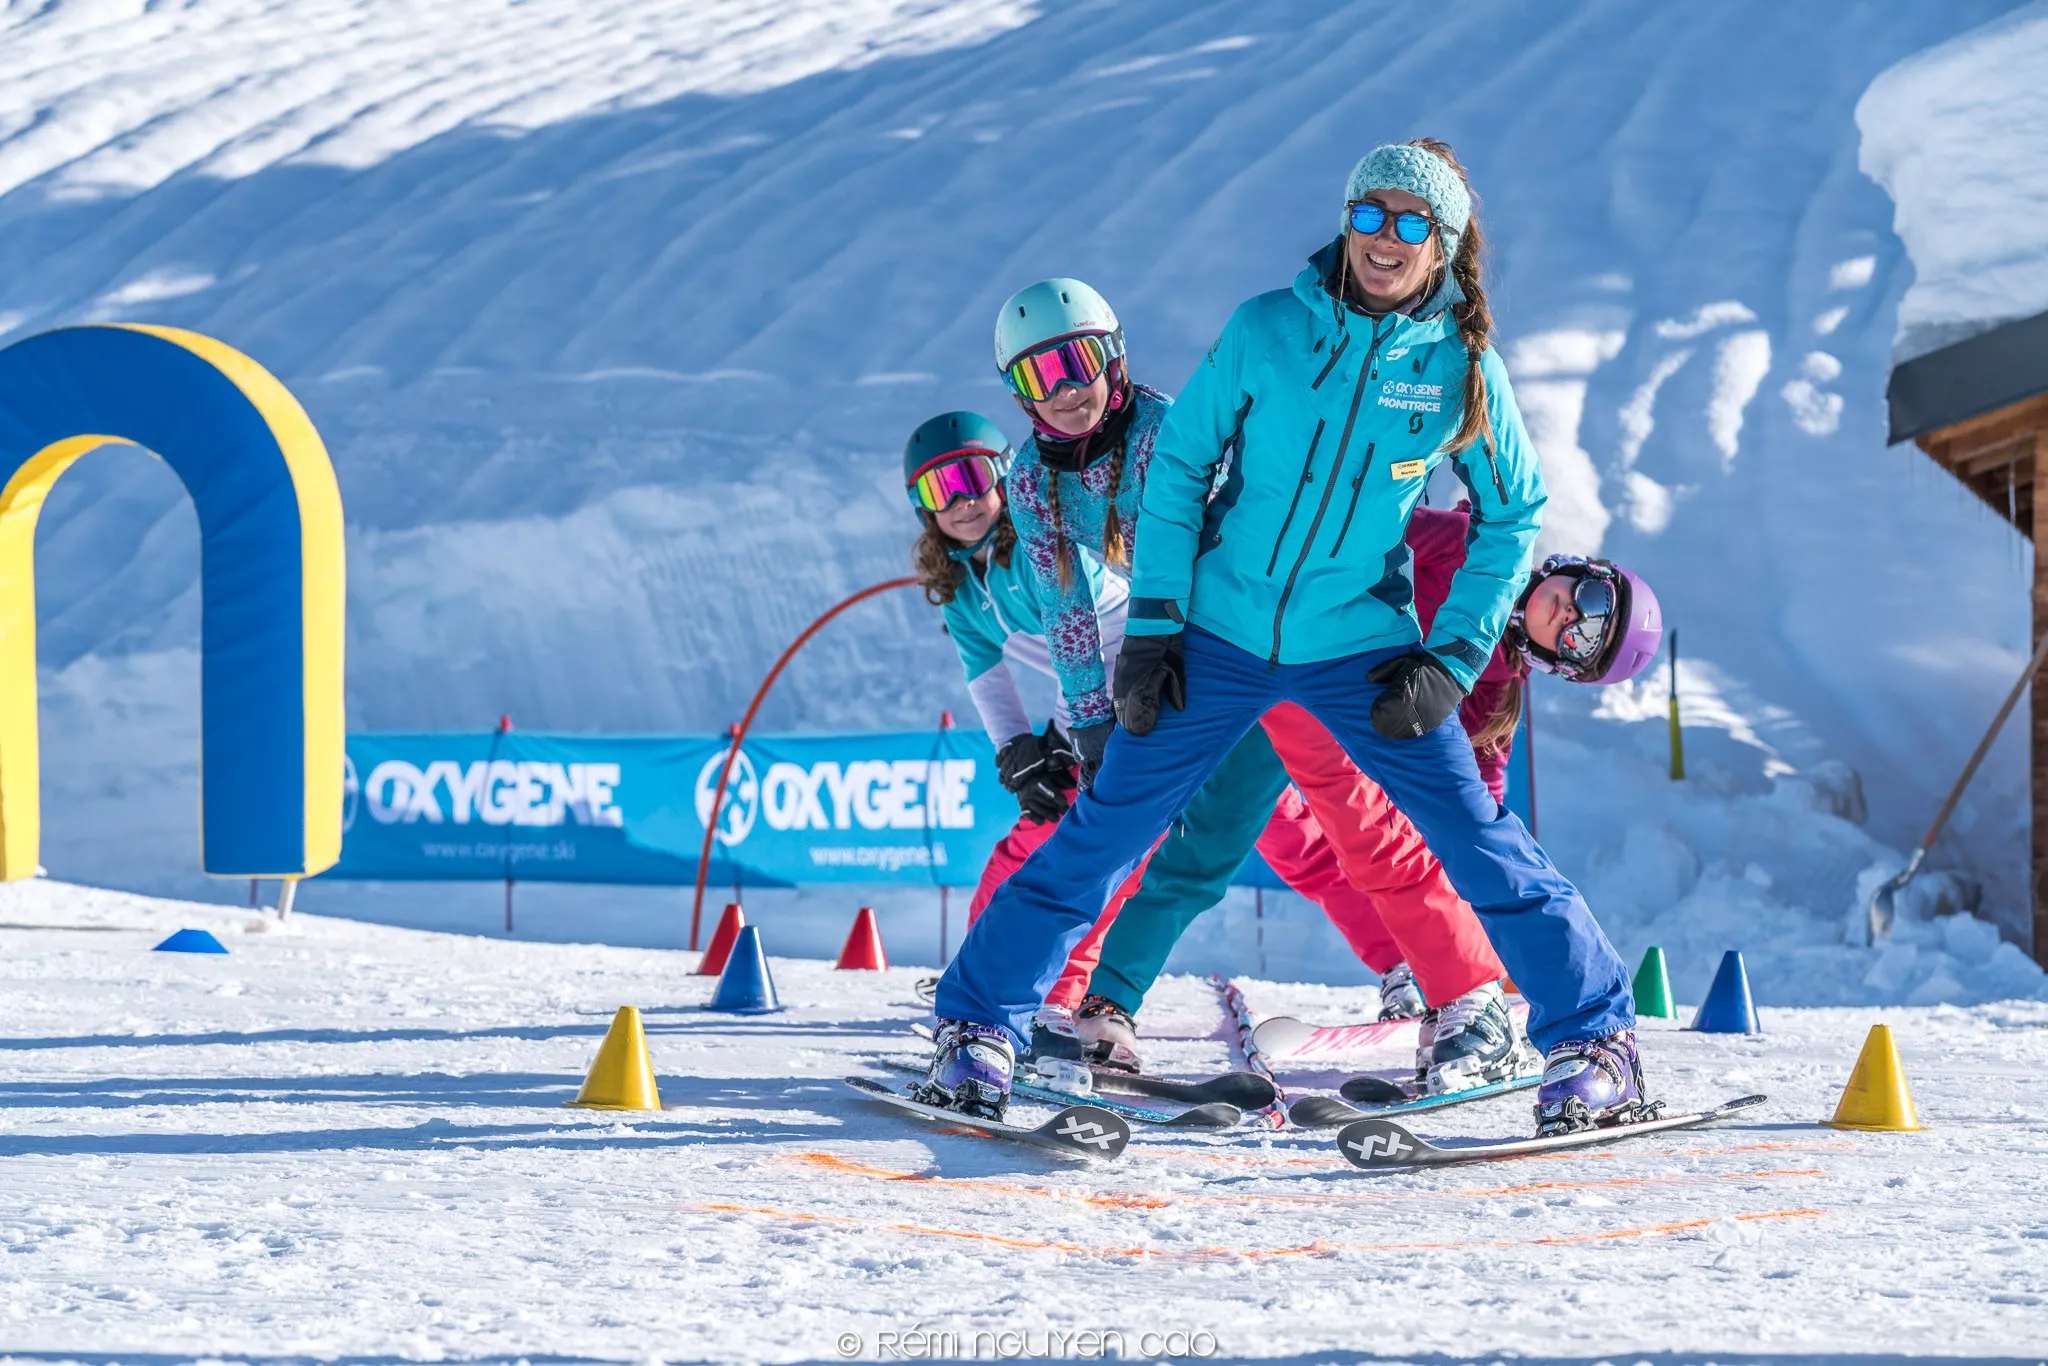 Oxygene Ski & Snowboard School Meribel in France, Europe | Snowboarding,Skiing - Rated 1